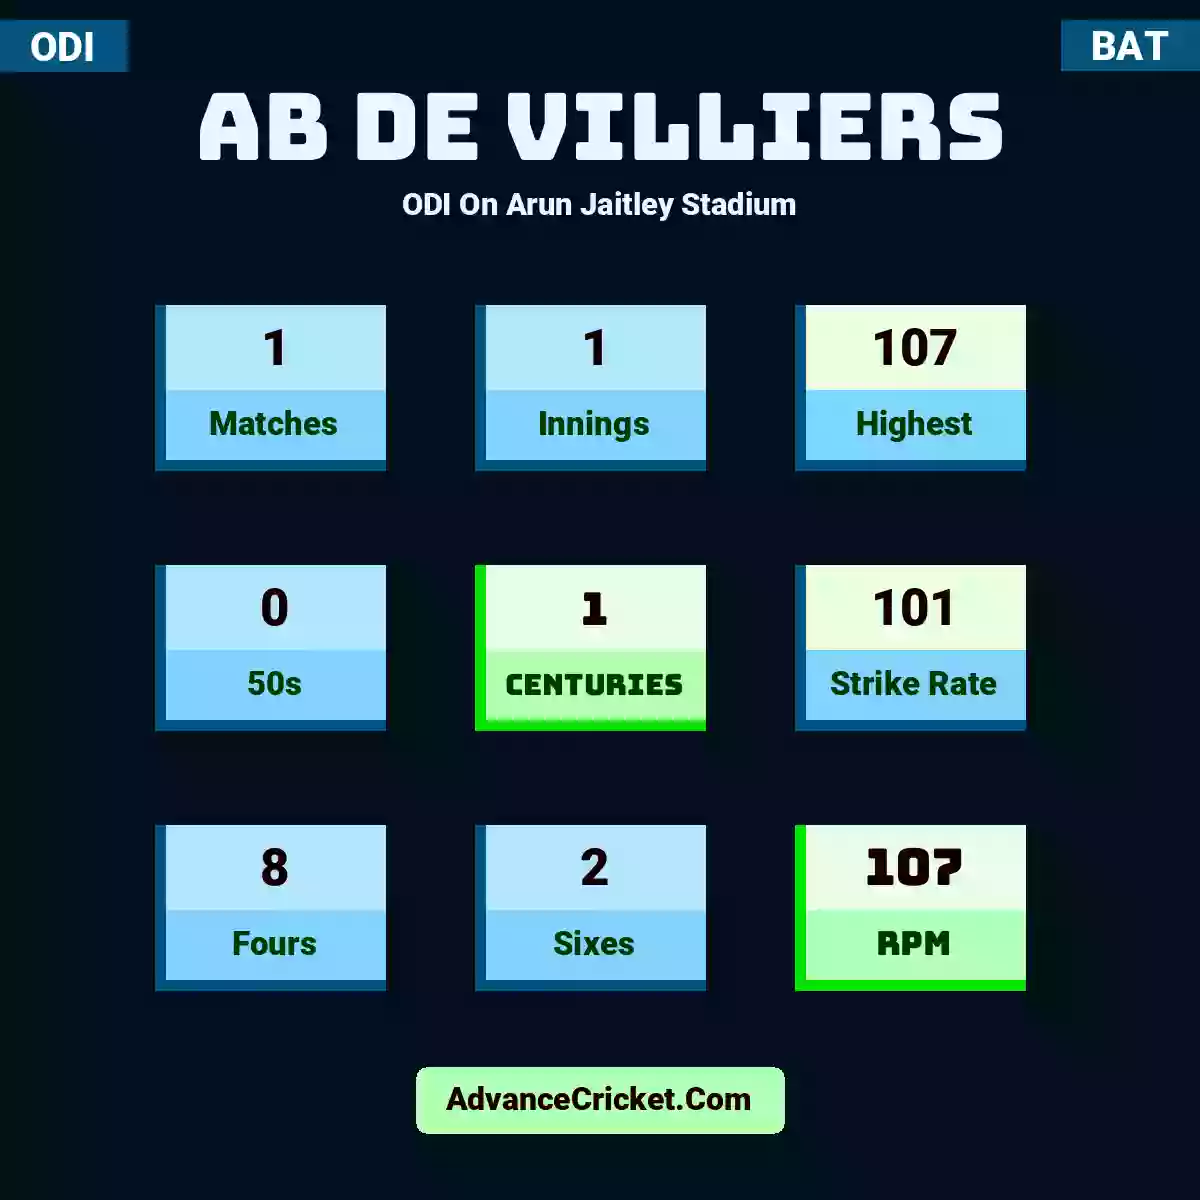 AB de Villiers ODI  On Arun Jaitley Stadium, AB de Villiers played 1 matches, scored 107 runs as highest, 0 half-centuries, and 1 centuries, with a strike rate of 101. A.Villiers hit 8 fours and 2 sixes, with an RPM of 107.